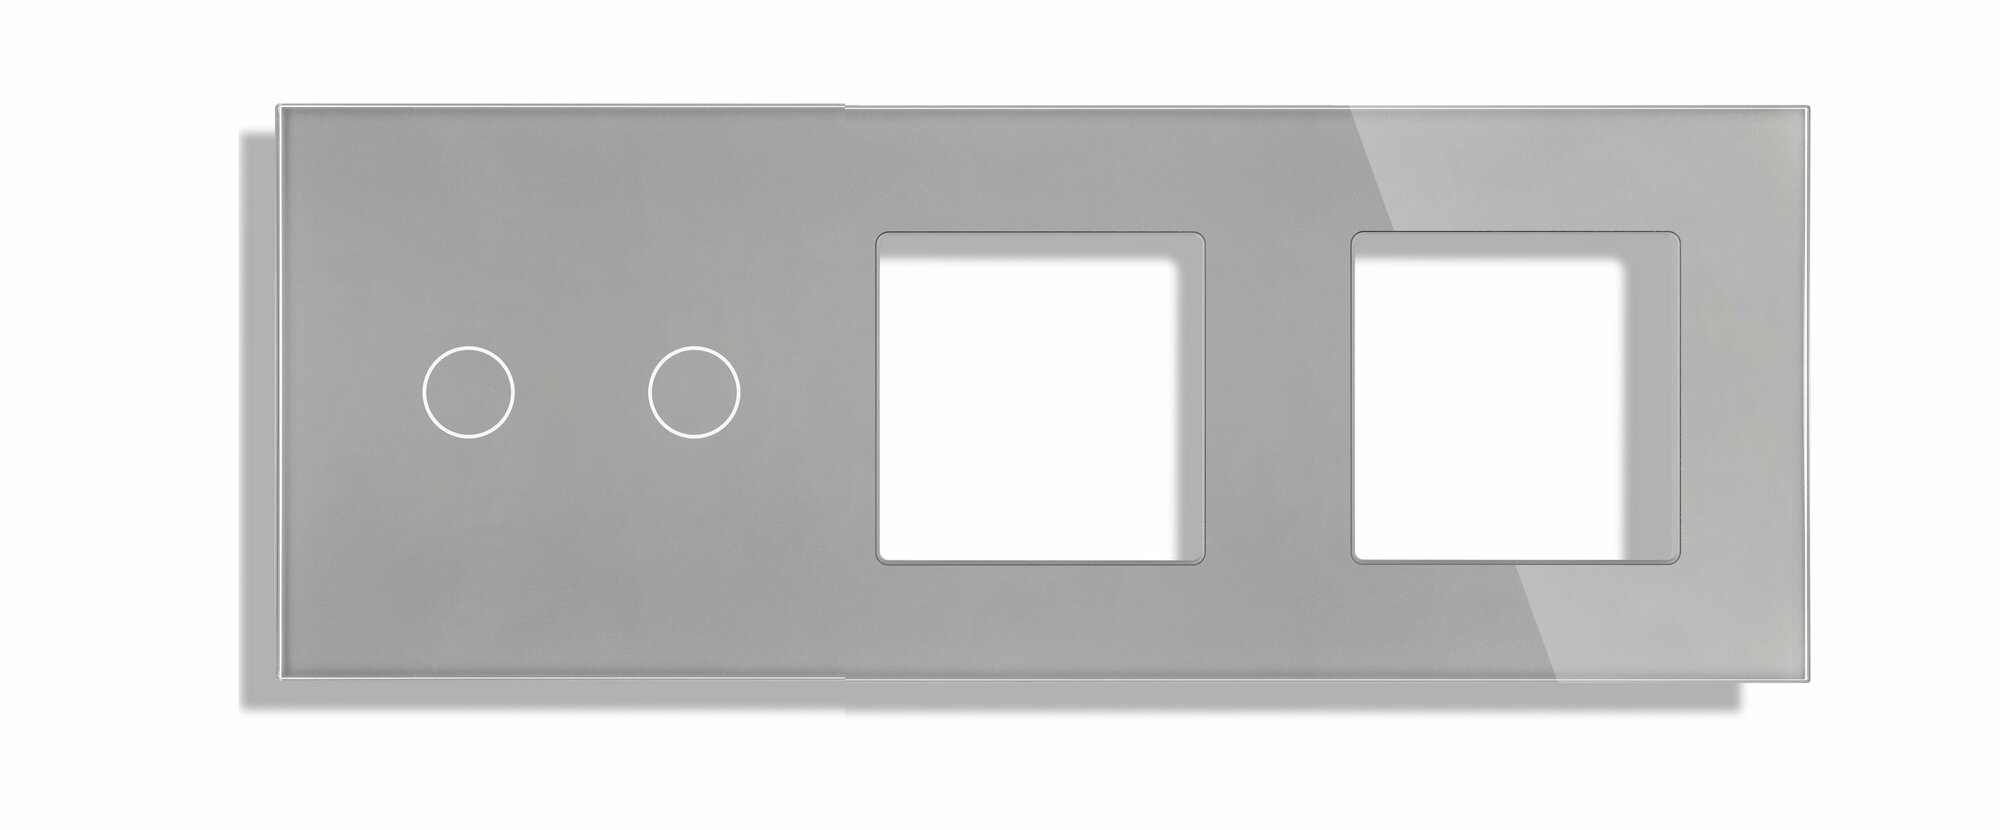 Рамка комби 3 поста (2G+2F), 228*86mm, стекло, цвет серый